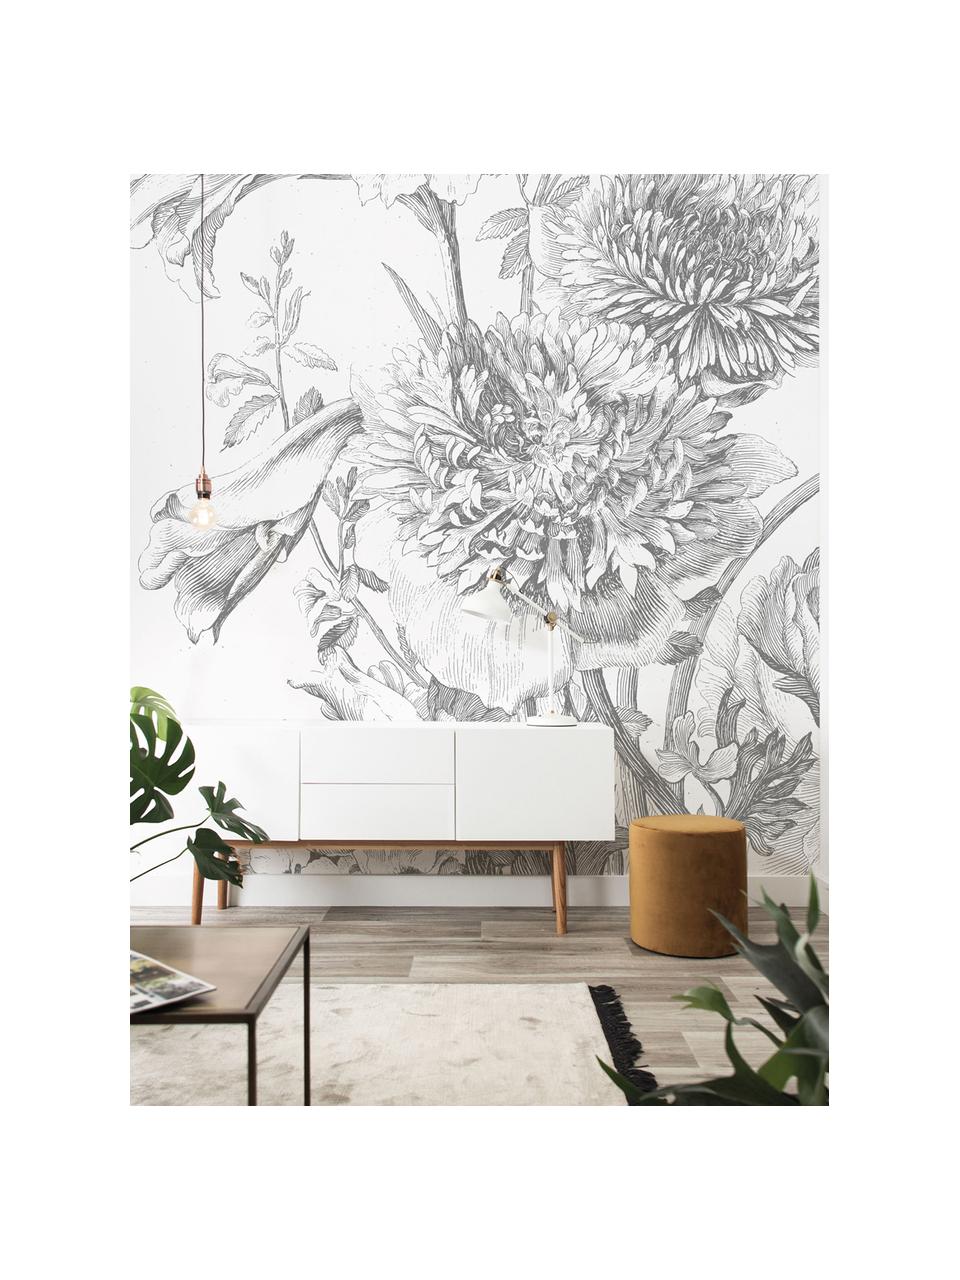 Adesivo murale Engraved Flowers, Tessuto non tessuto, ecologico e biodegradabile, Grigio e bianco, opaco, Larg. 389 x Alt. 280 cm